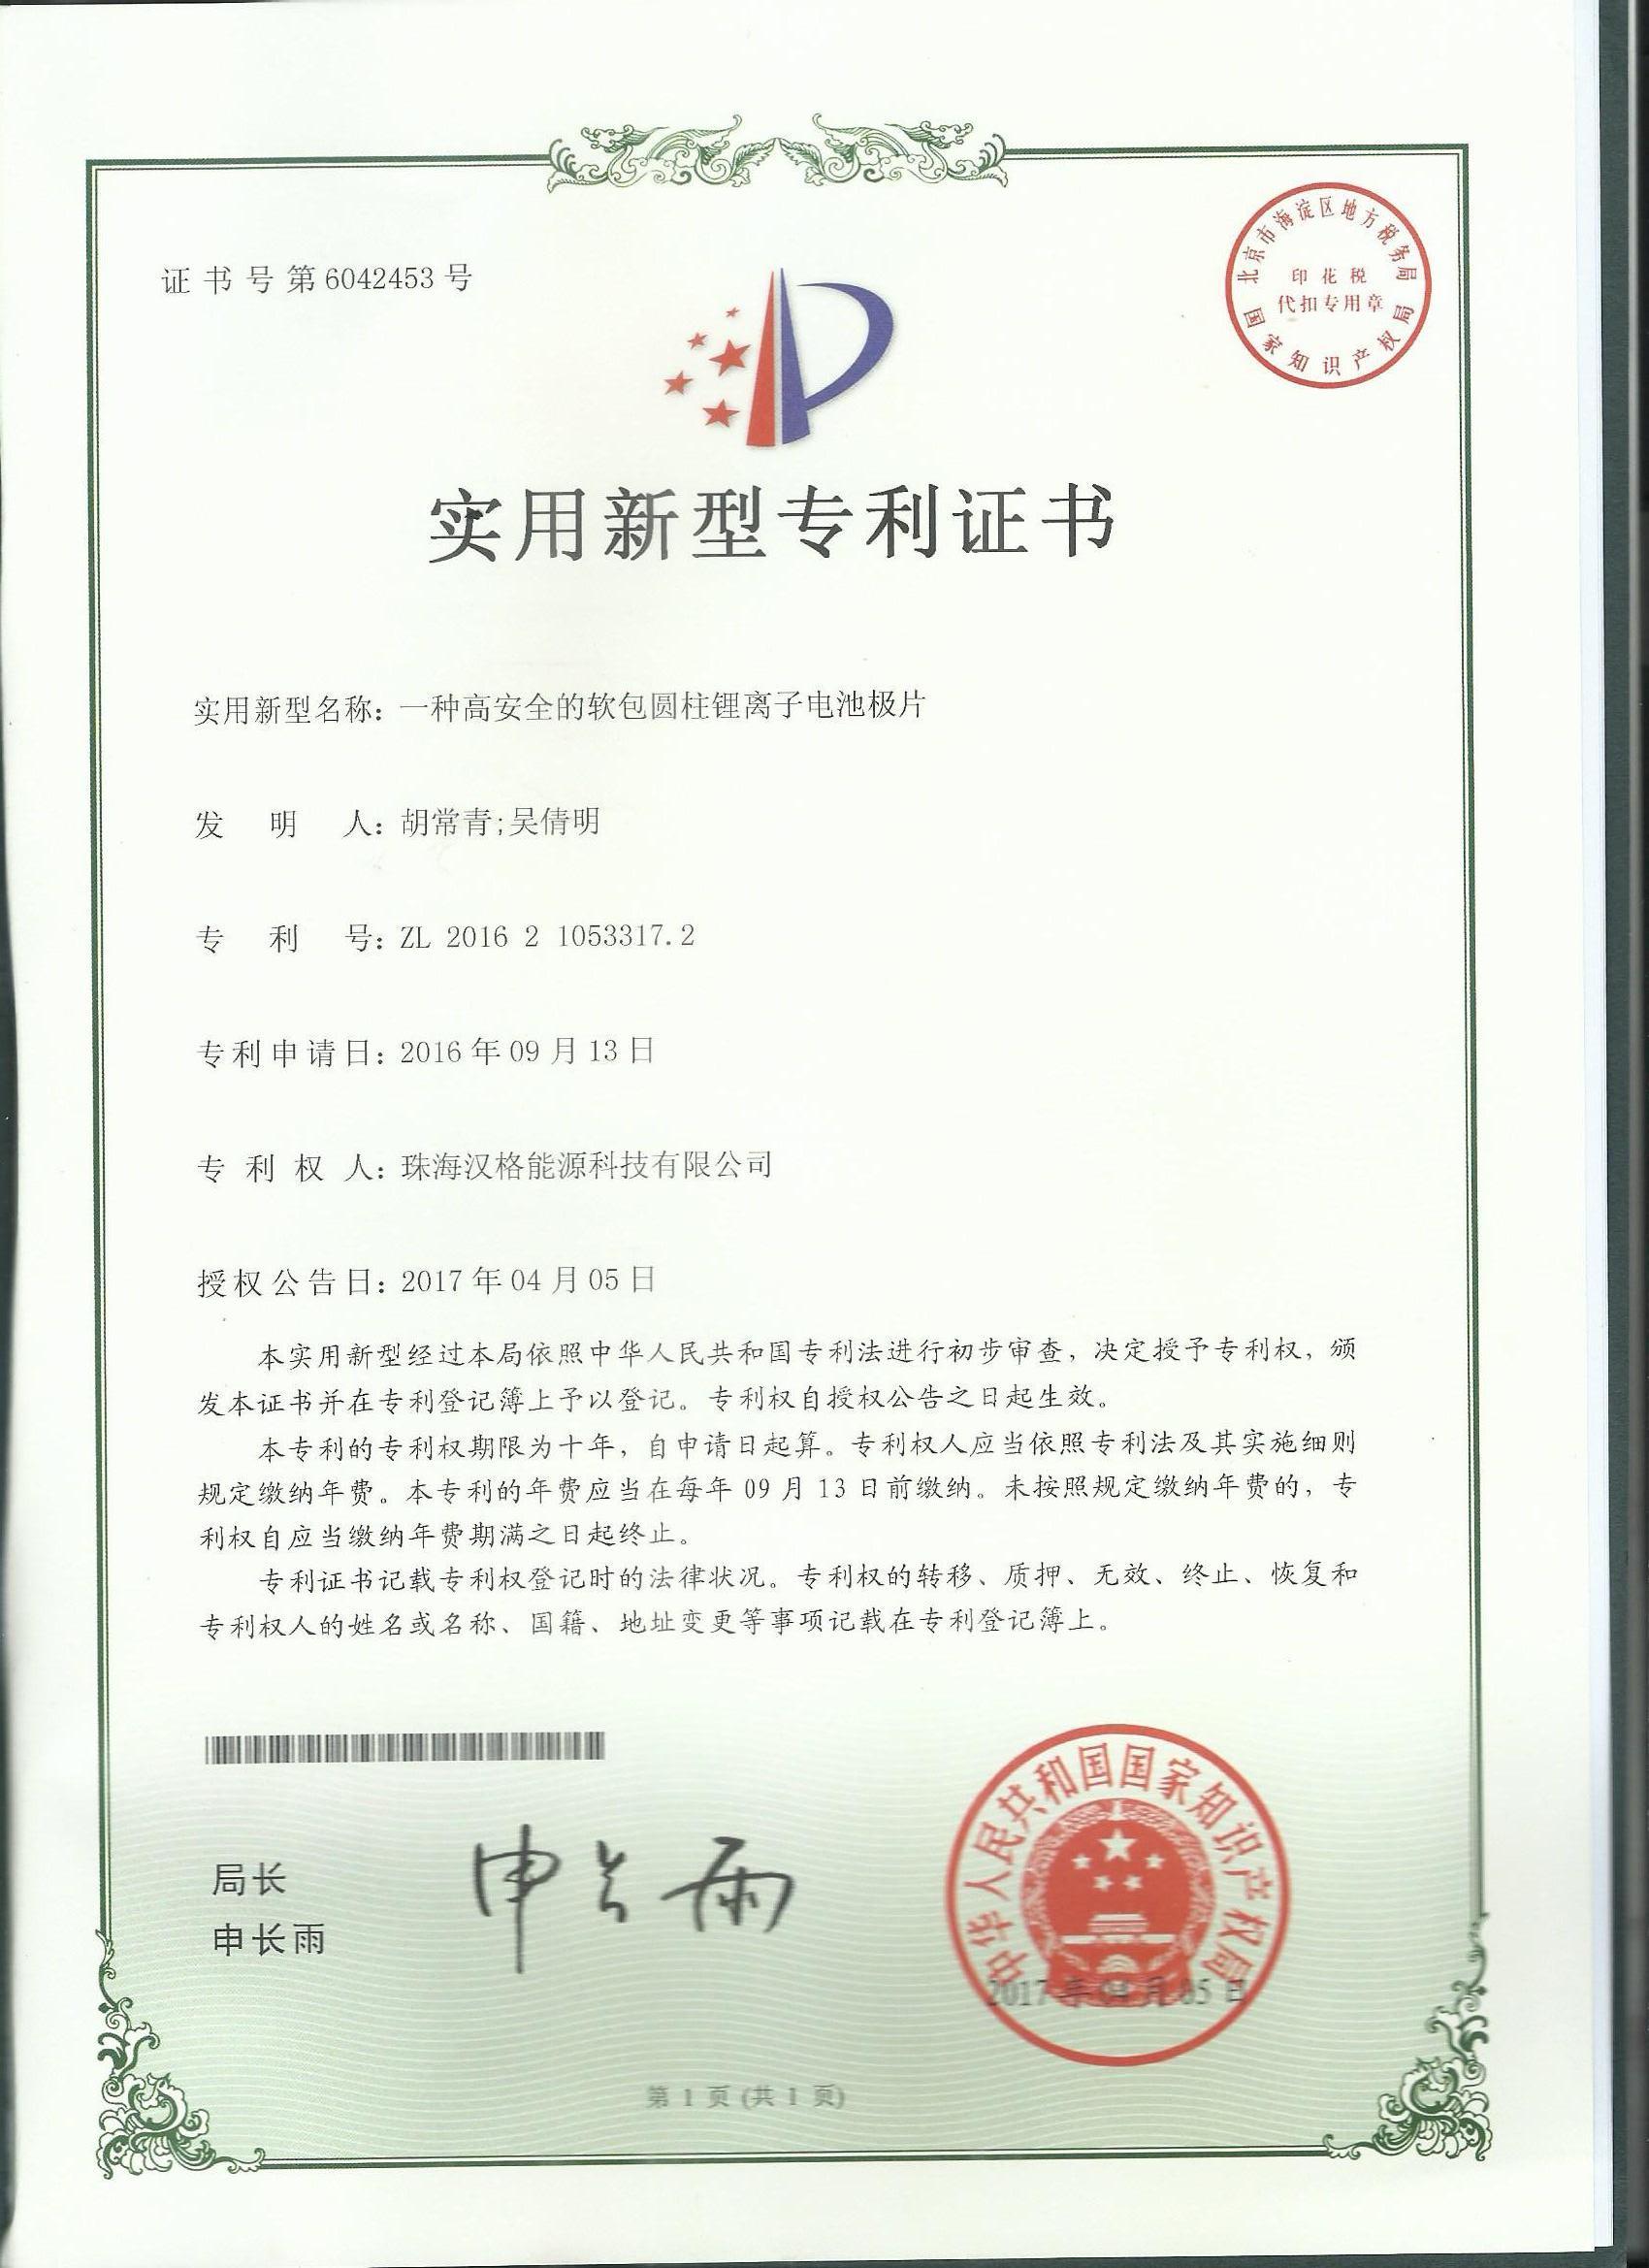 Utility model patent certificate 12